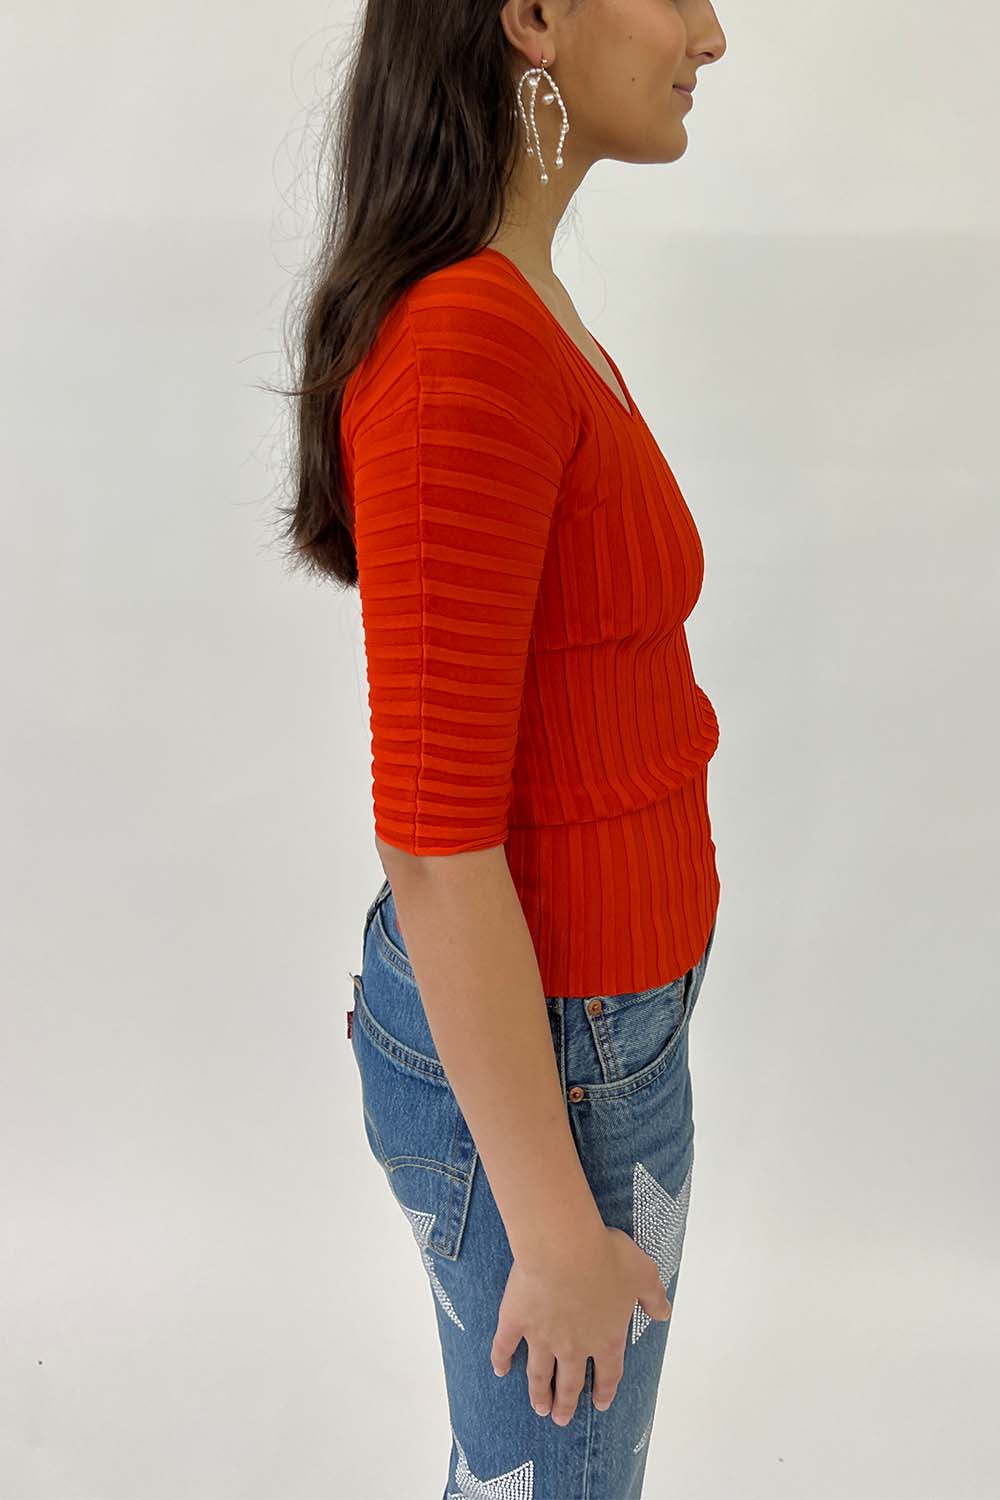 Malene Birger - Ivena Top: Orange ouimillie